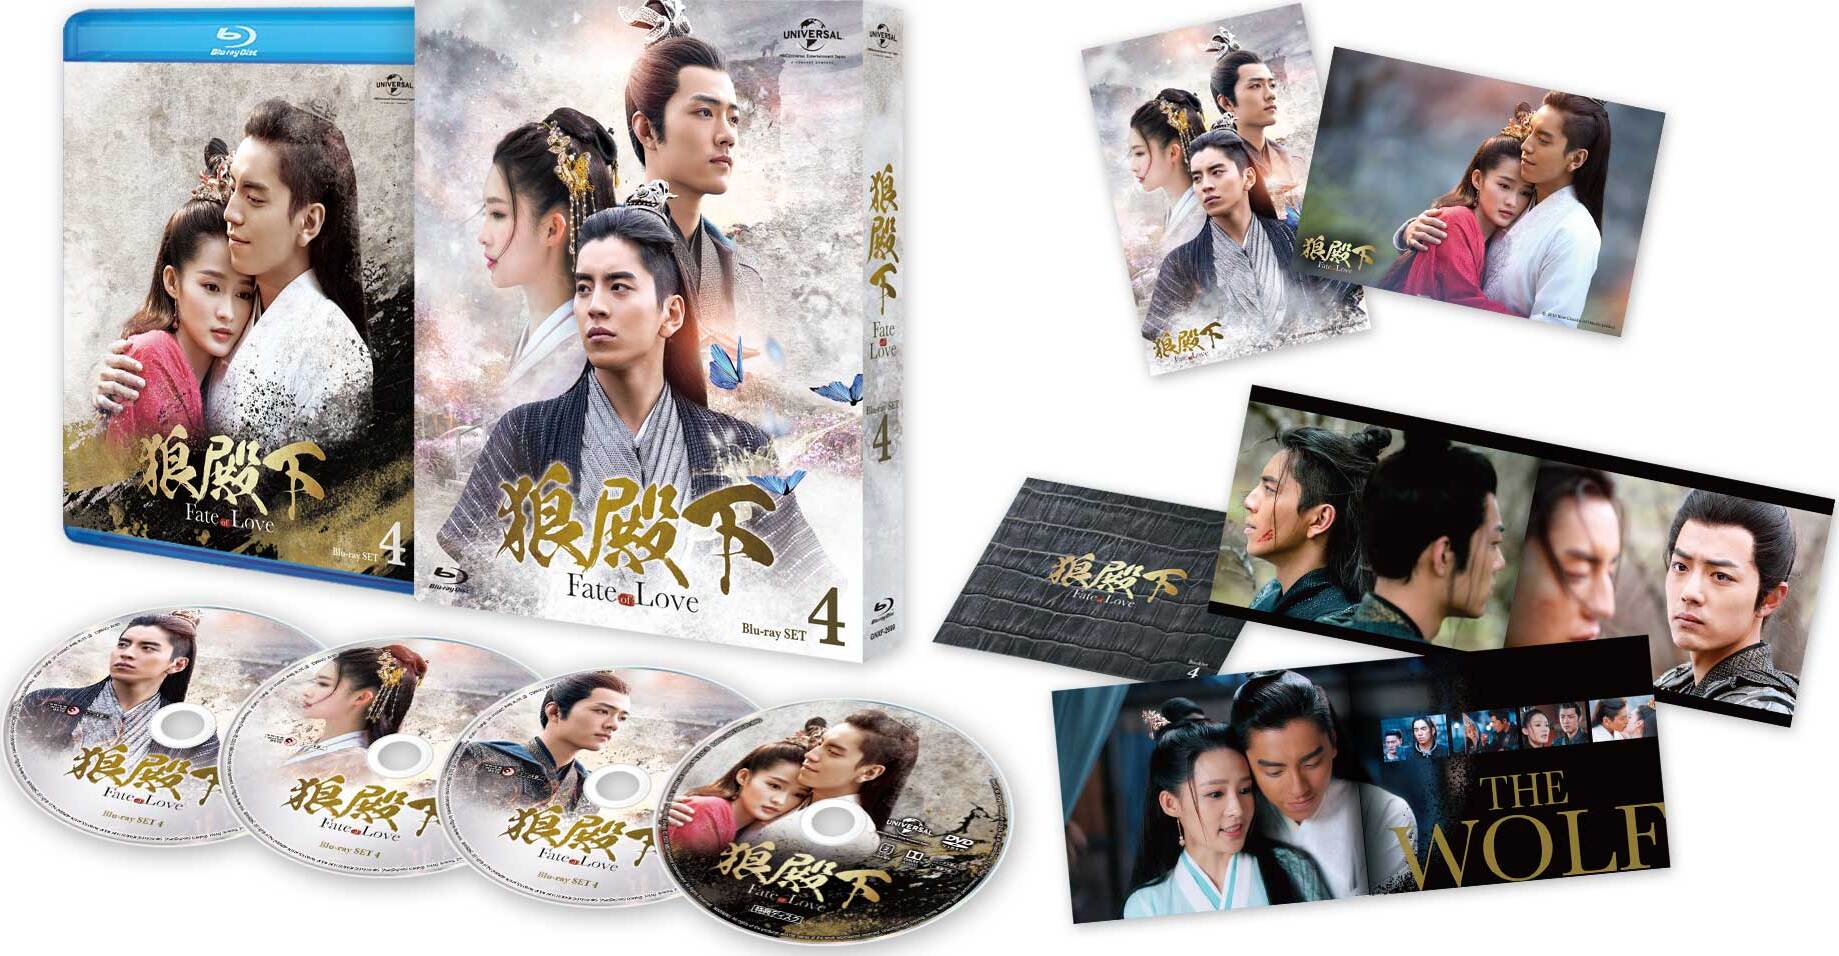 The Wolf Blu-ray (狼殿下-Fate of Love- / Lang dian xia / SET4 / with Bonus  DVD) (Japan)